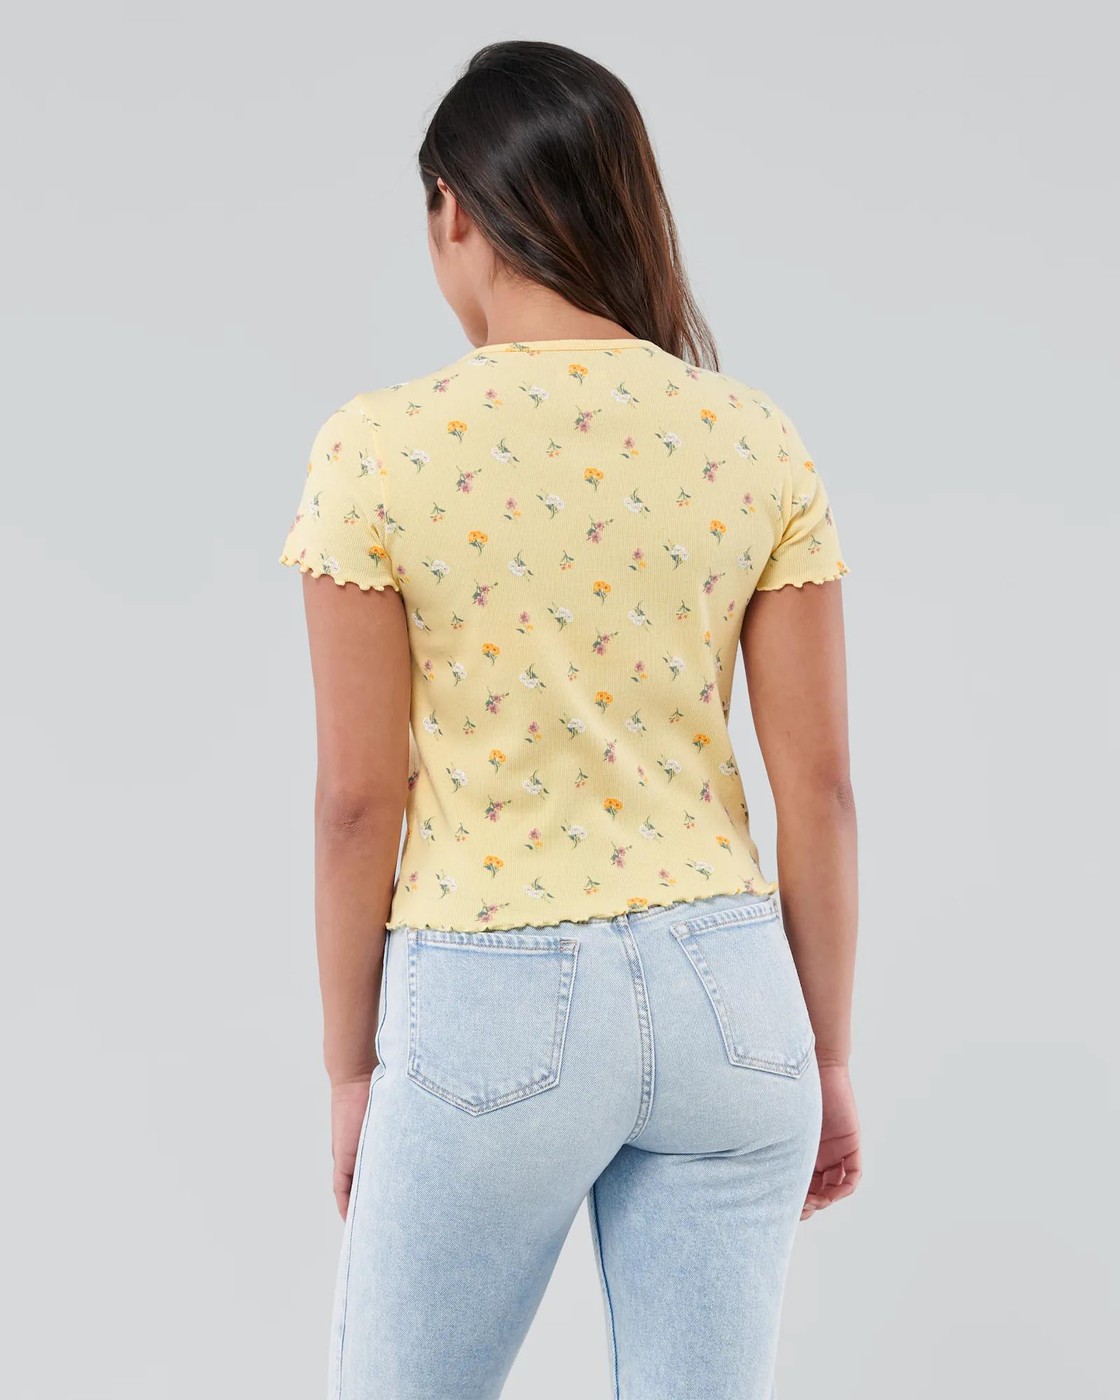 Желтая футболка - женская футболка Hollister, XS, XS